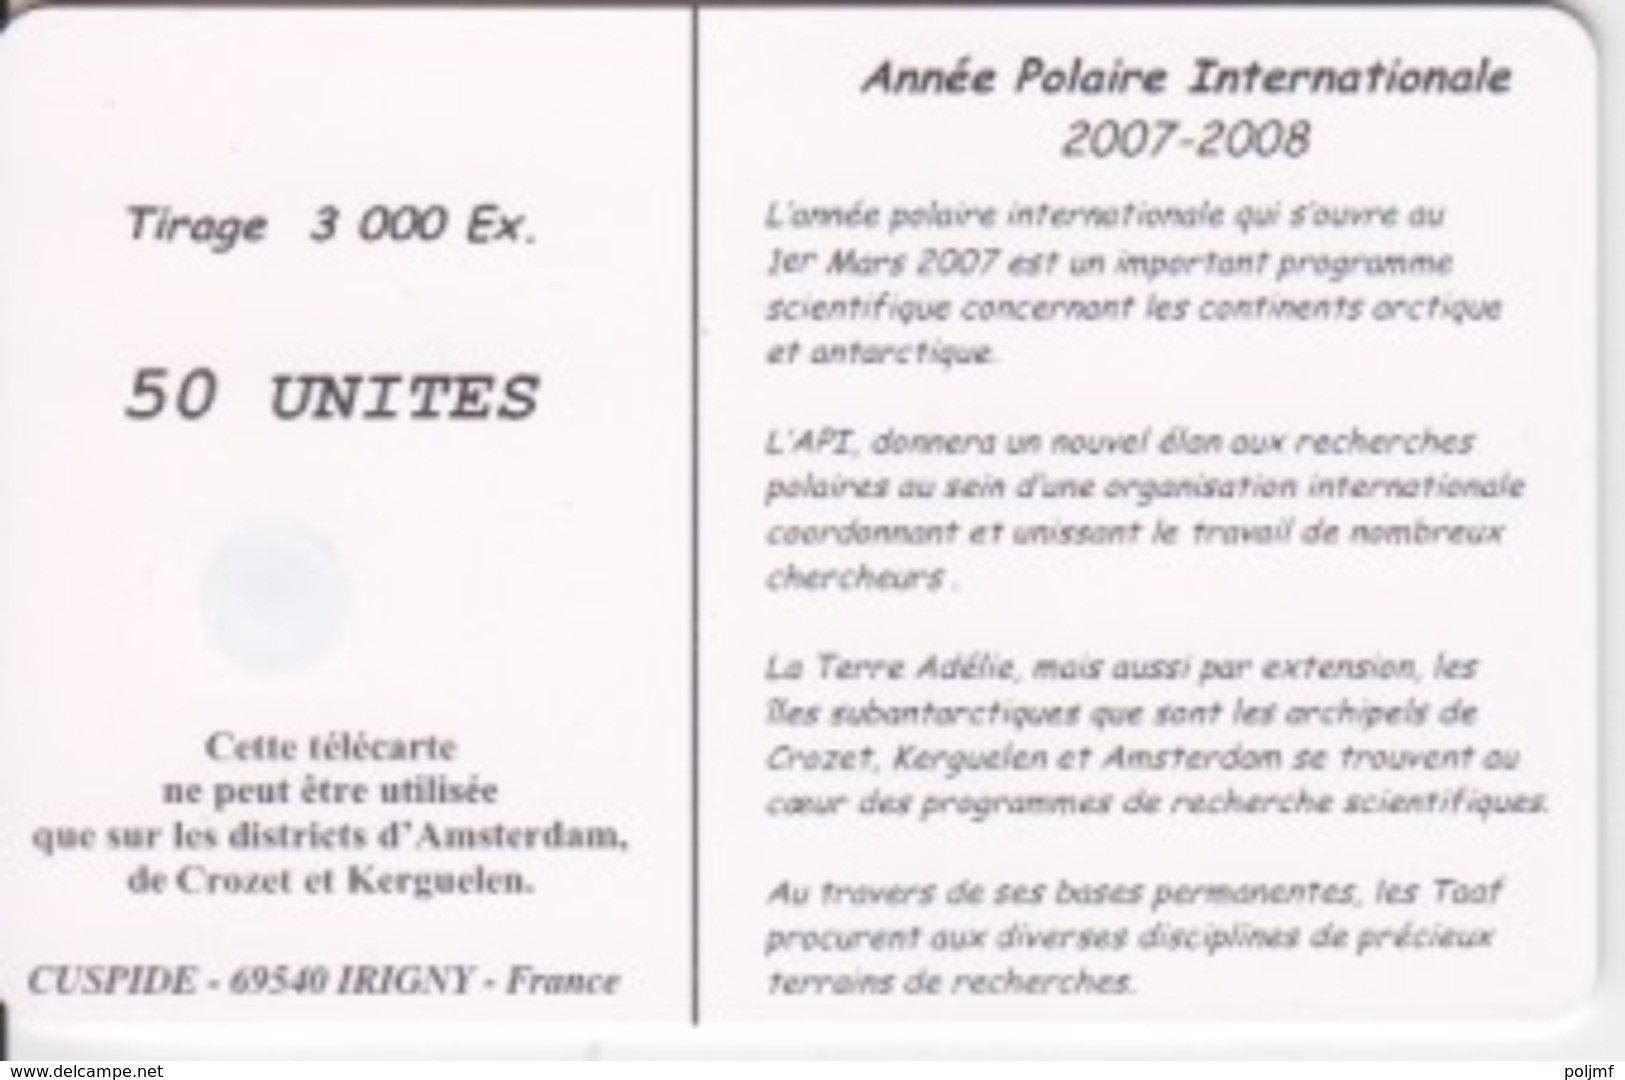 Télécarte 50U, Tirage 3000, Année Polaire Internationale 2007-2008 (Iceberg) - TAAF - Franse Zuidpoolgewesten